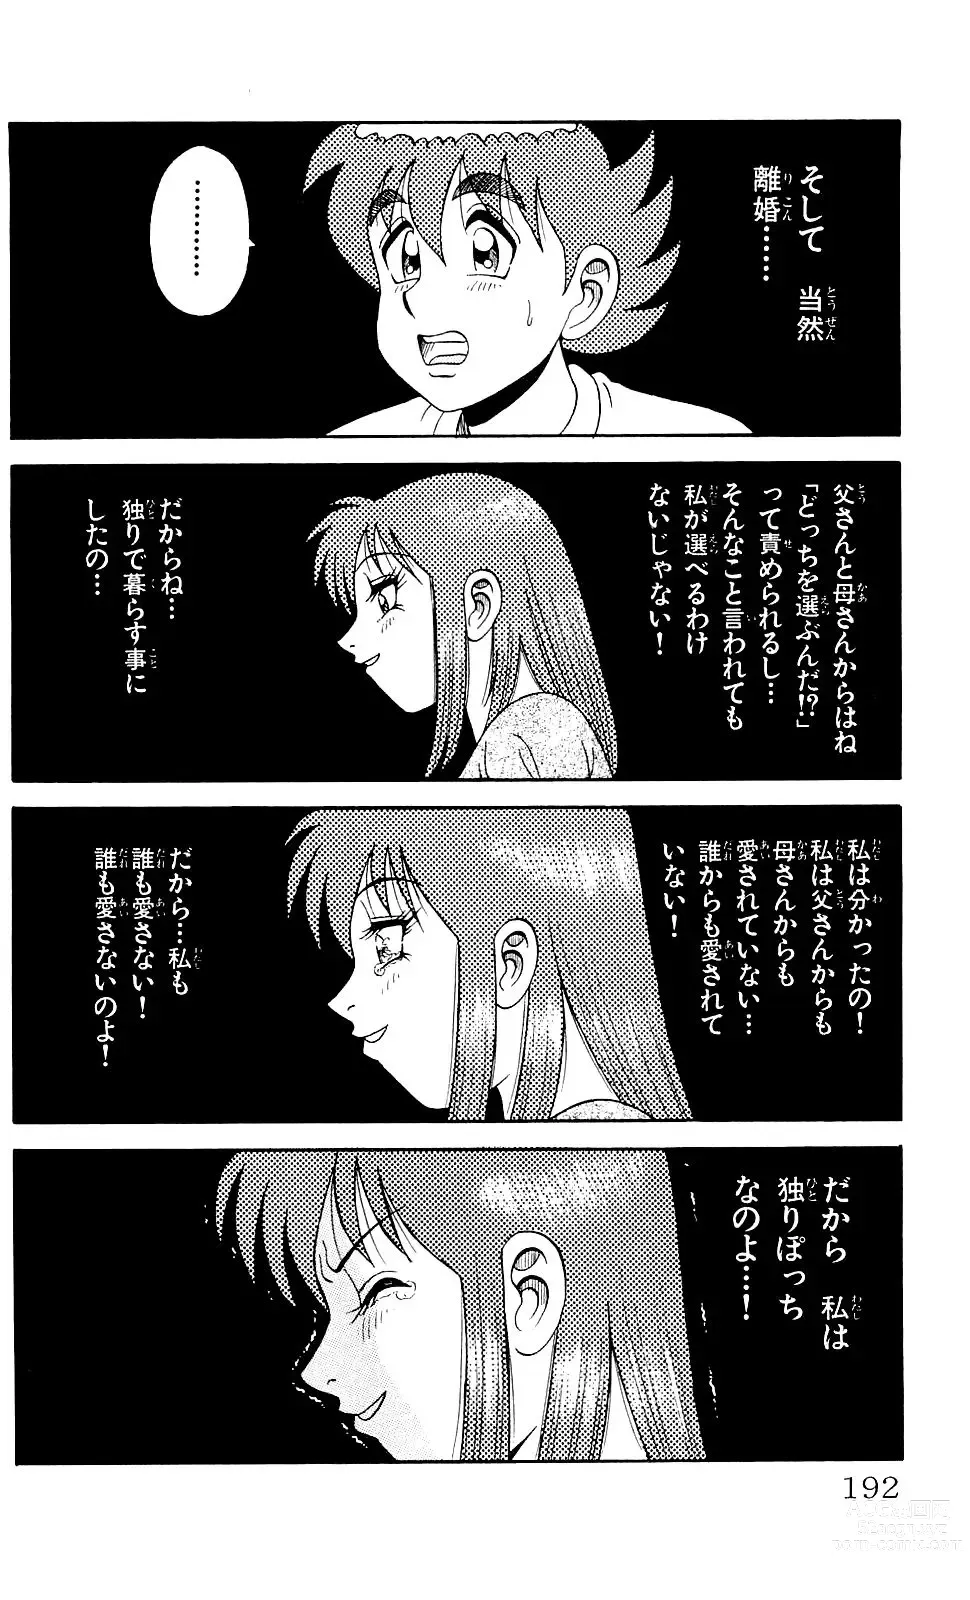 Page 190 of manga Orette Piyoritan 04